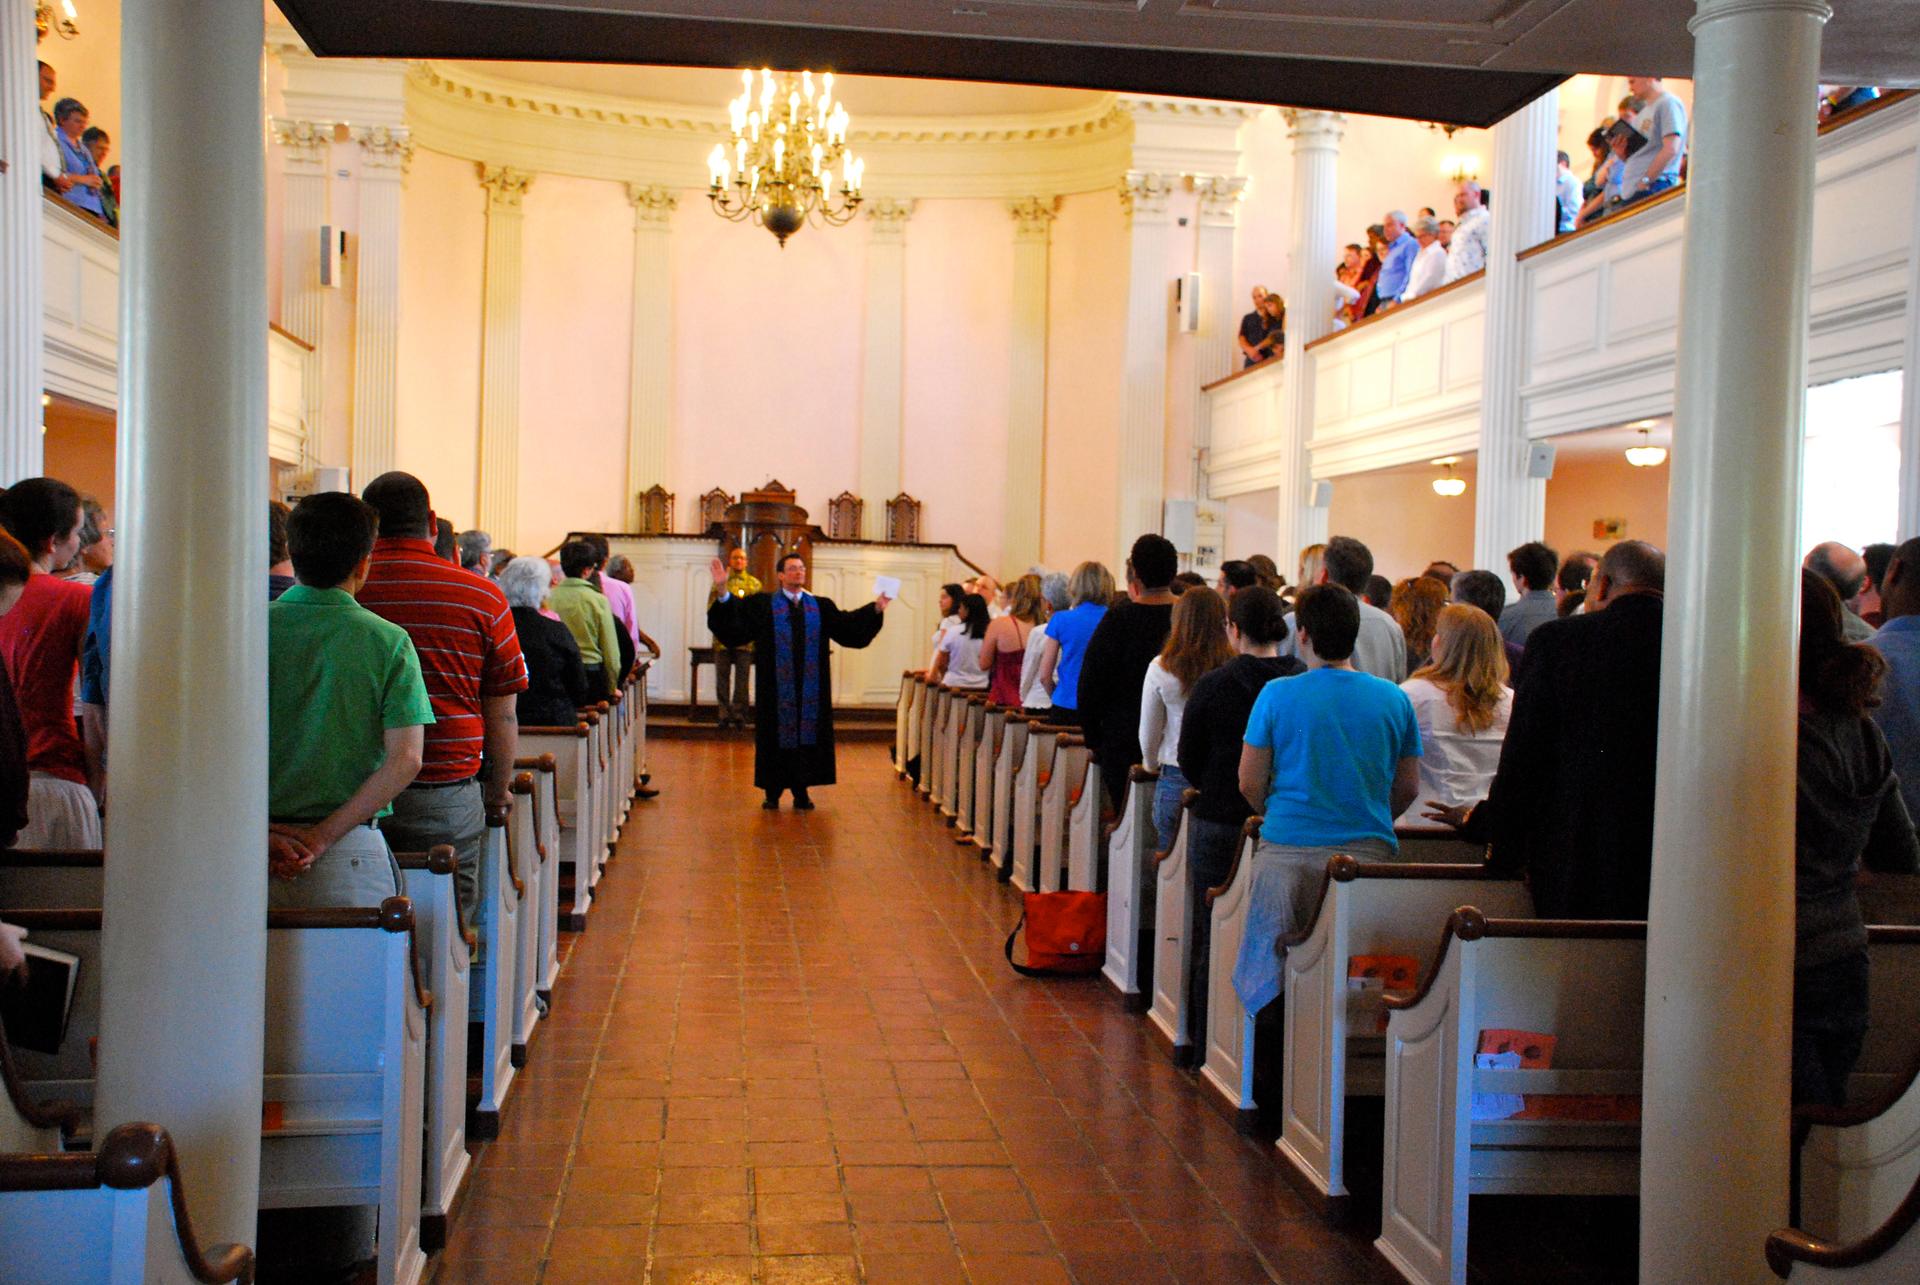 Sunday mass at the All Souls Church Unitarian in Washington DC.